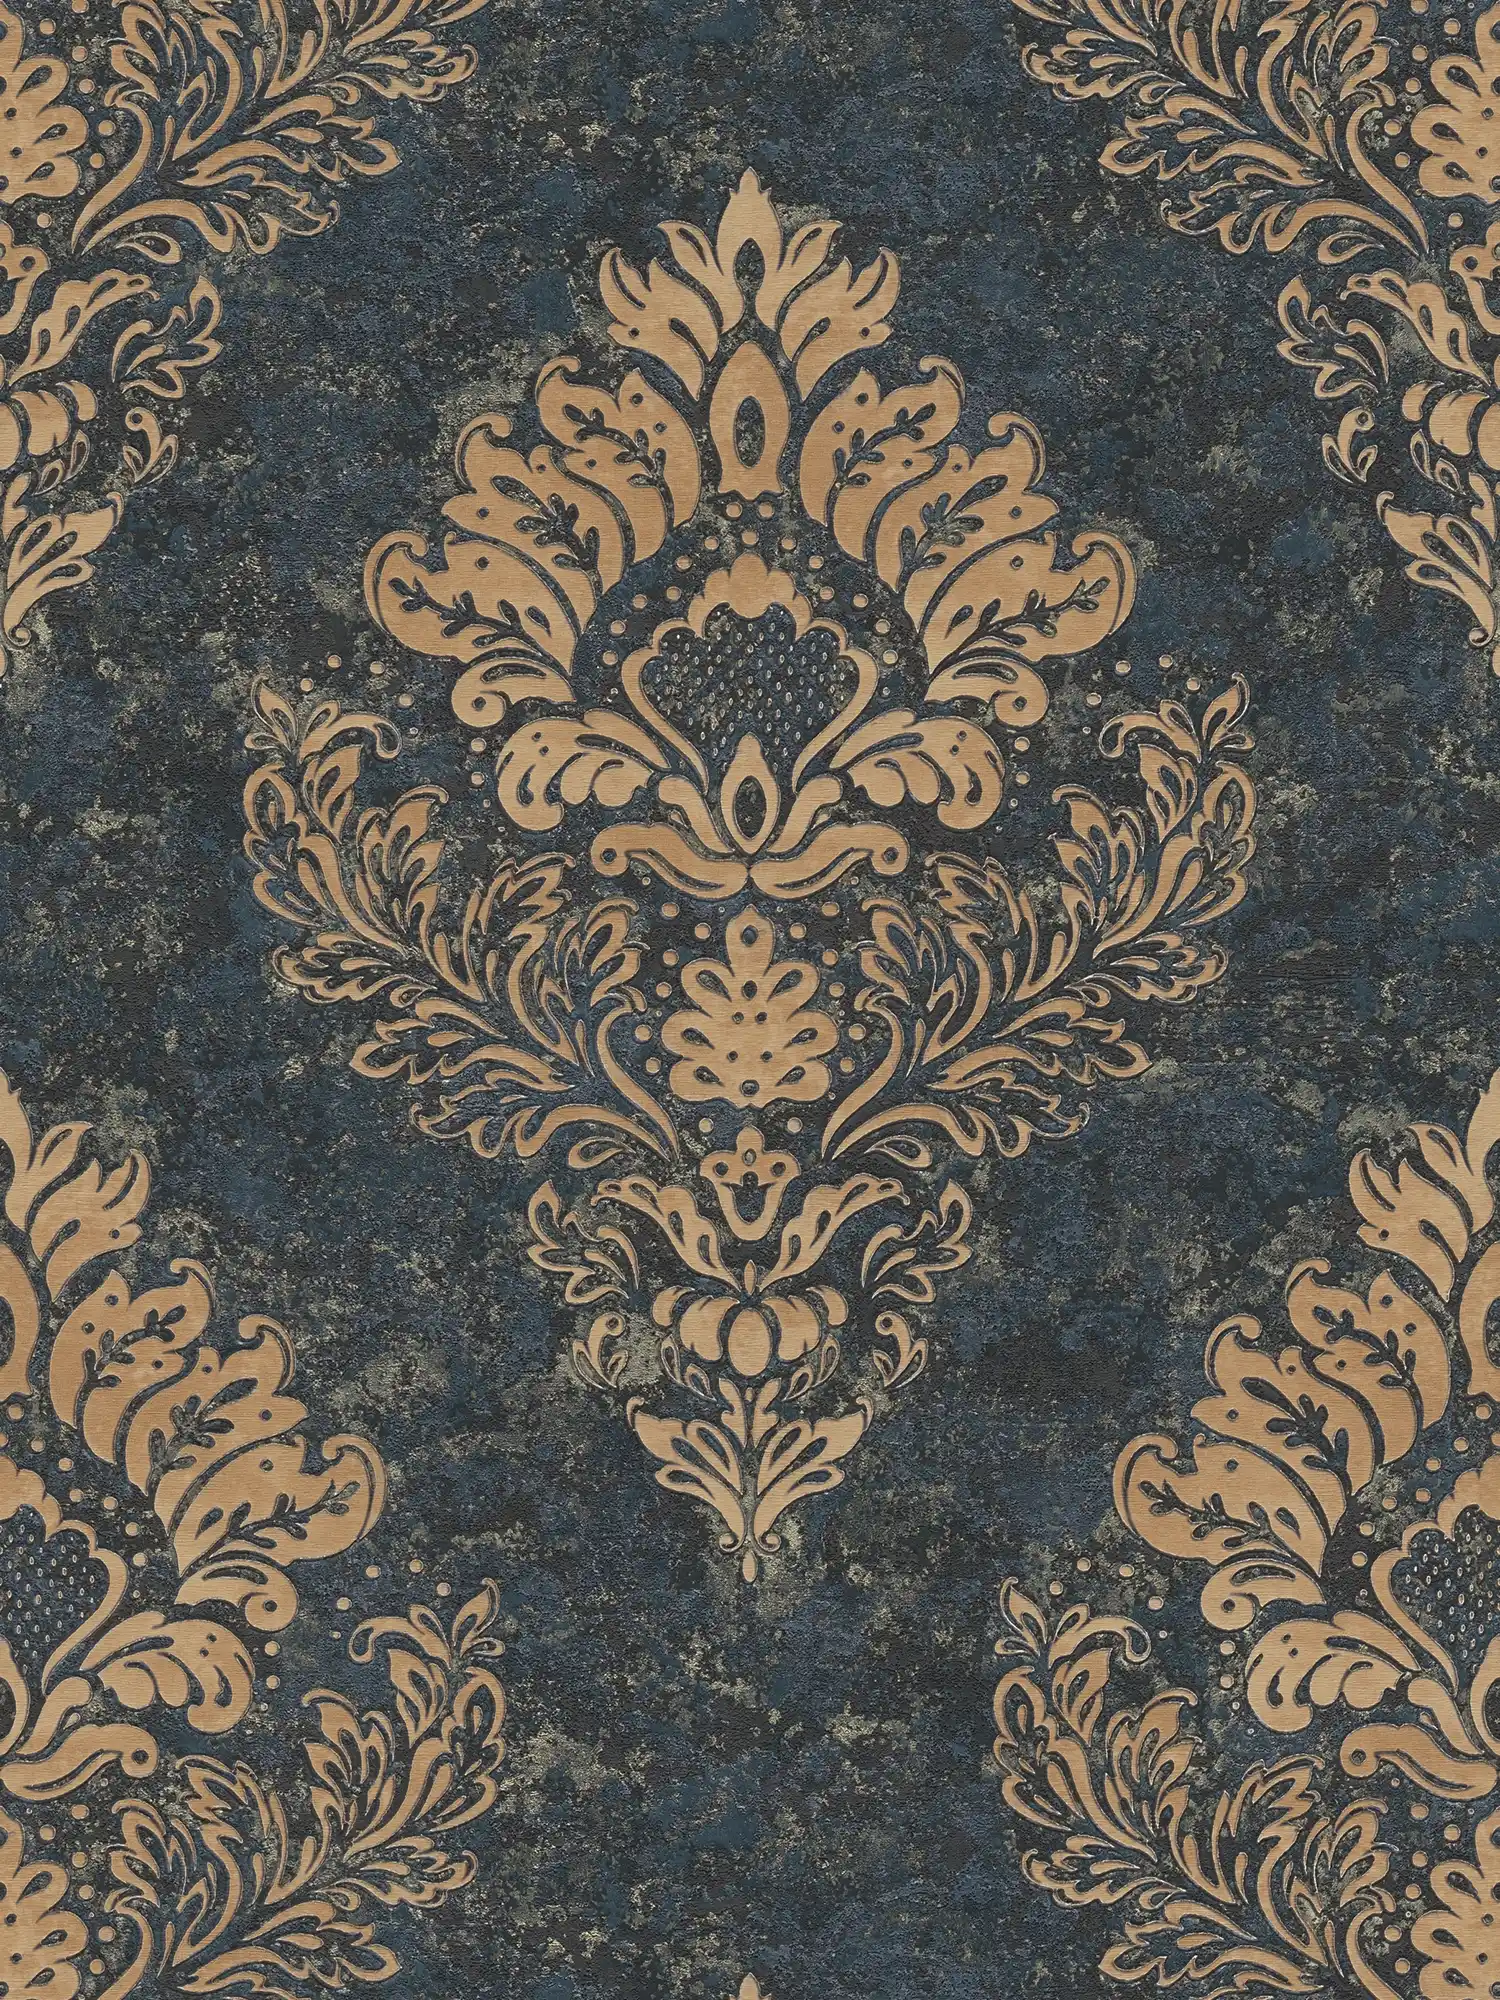         Ornamenttapete mit floralem Stil & Gold-Effekt – Beige, Blau, Braun
    